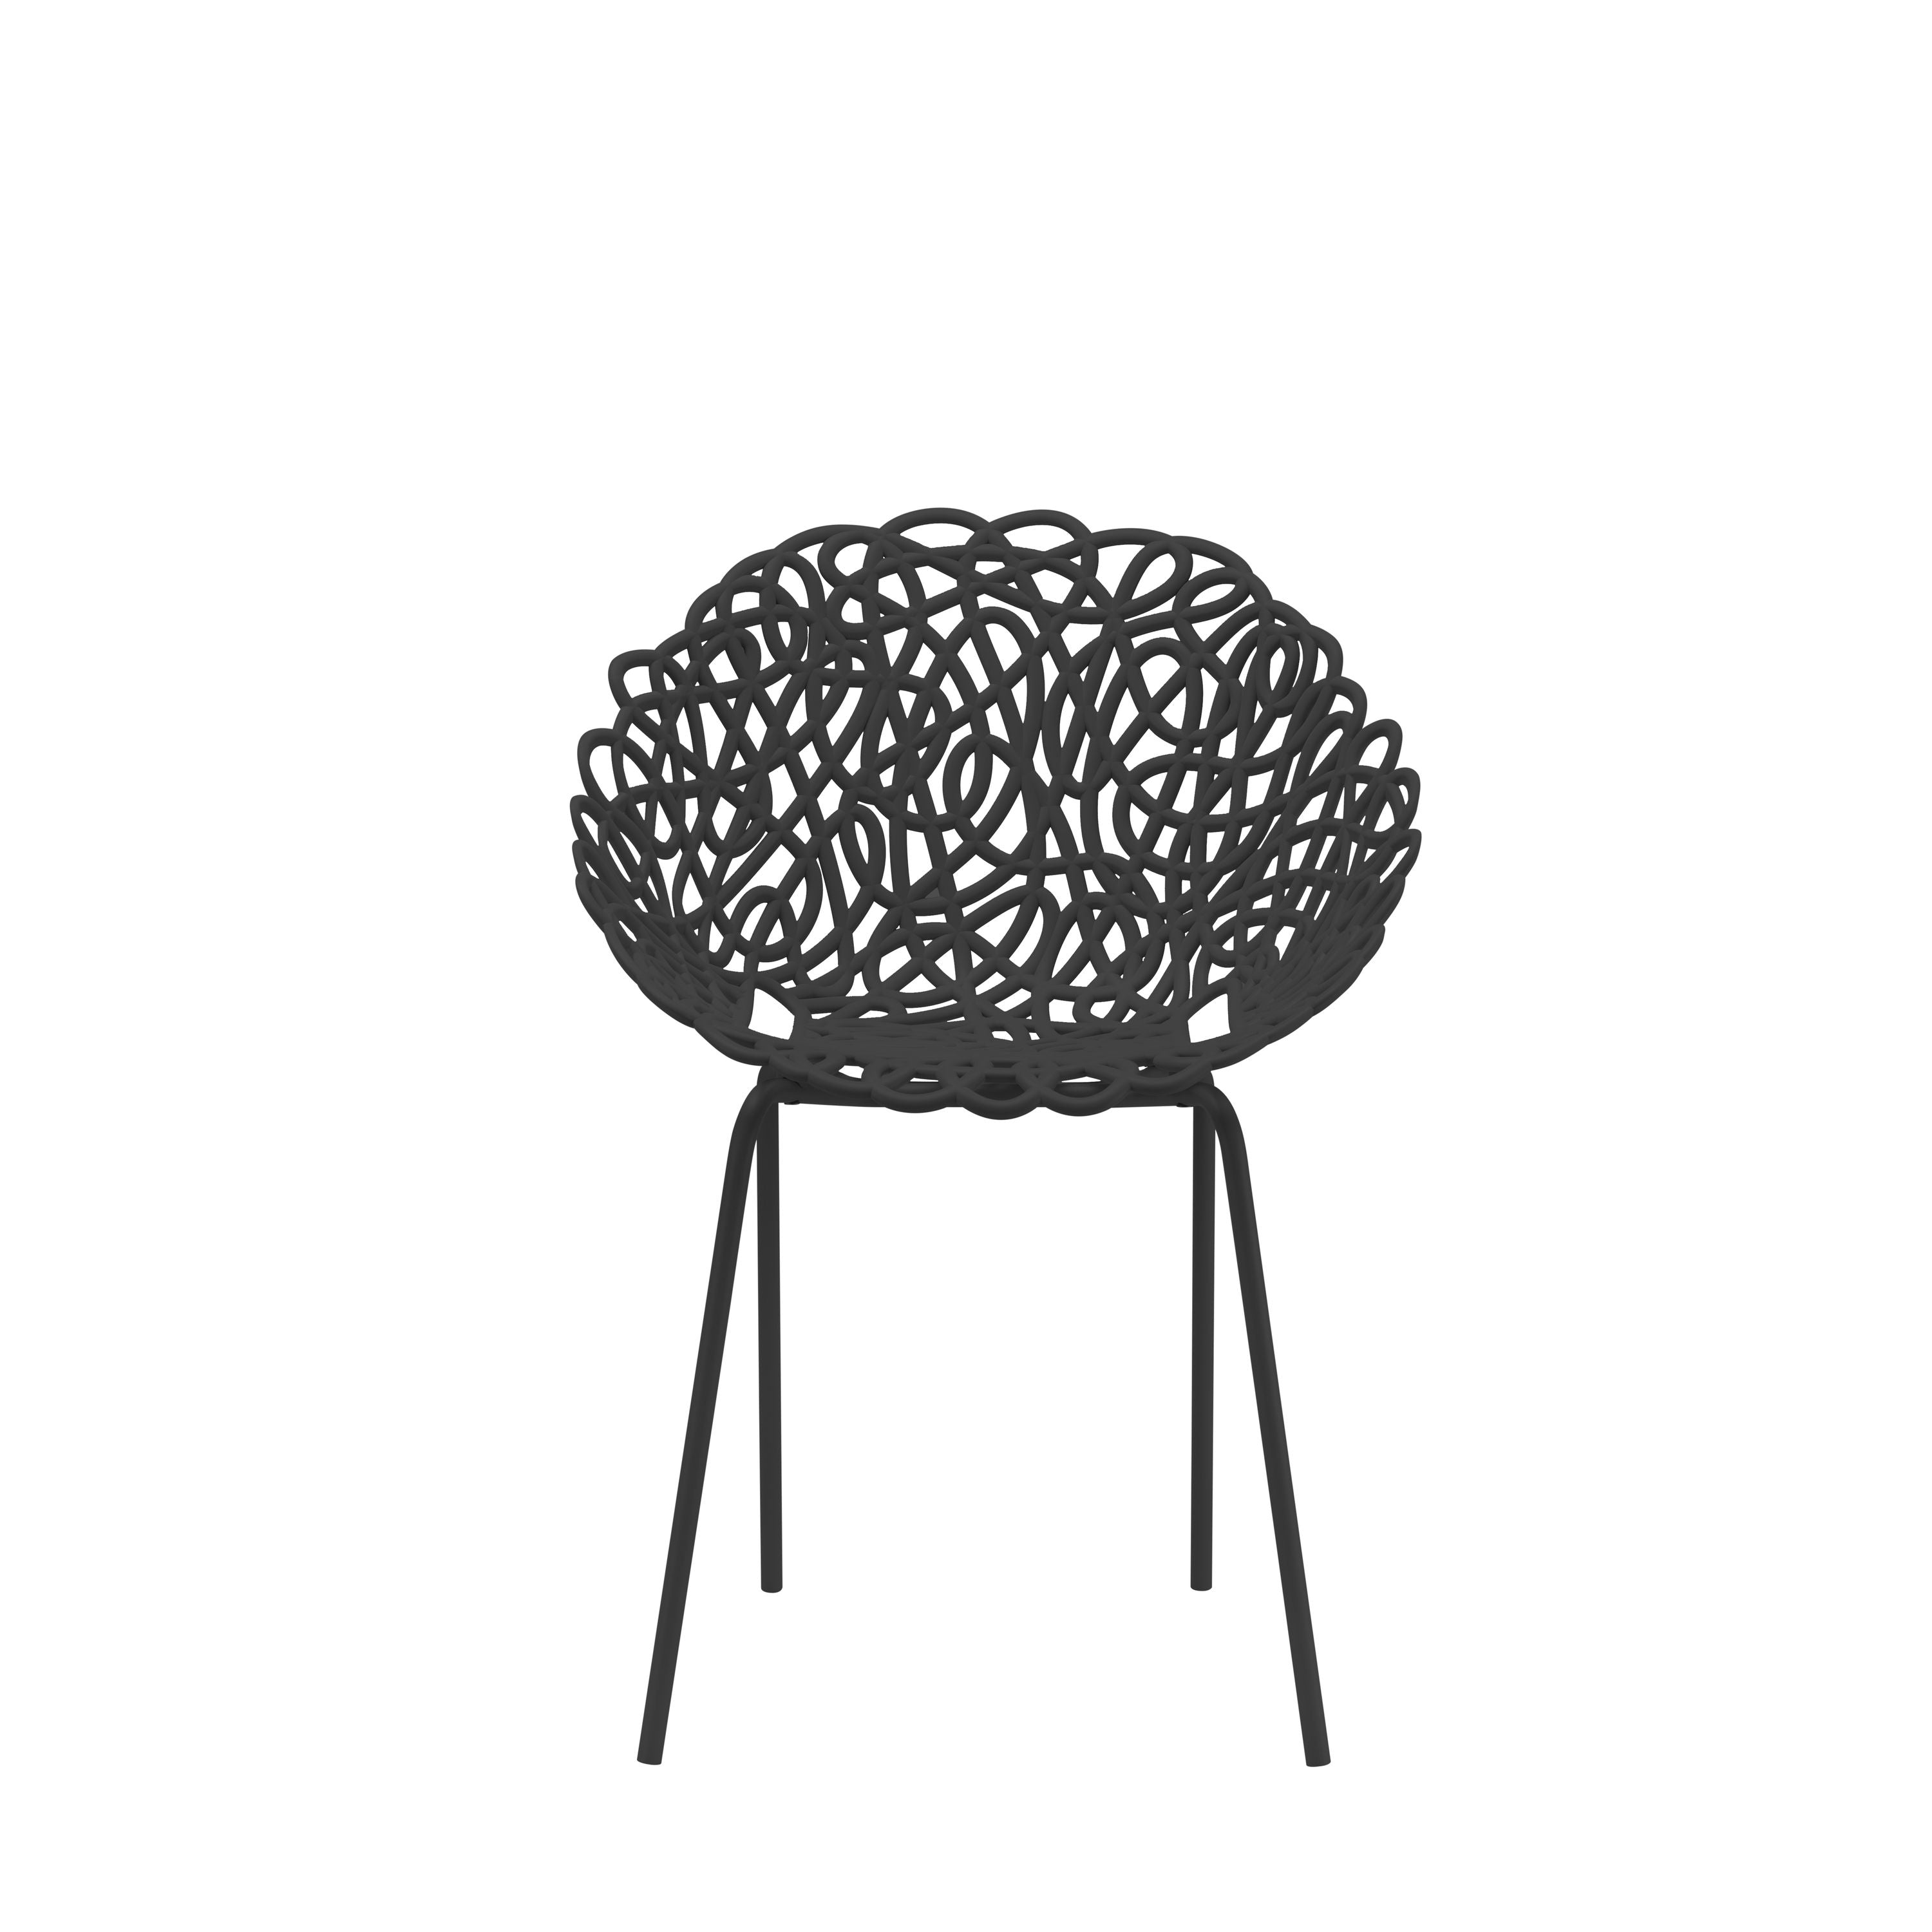 Qeeboo Bacana Chair Outdoor Set Of 2 Pcs, Black